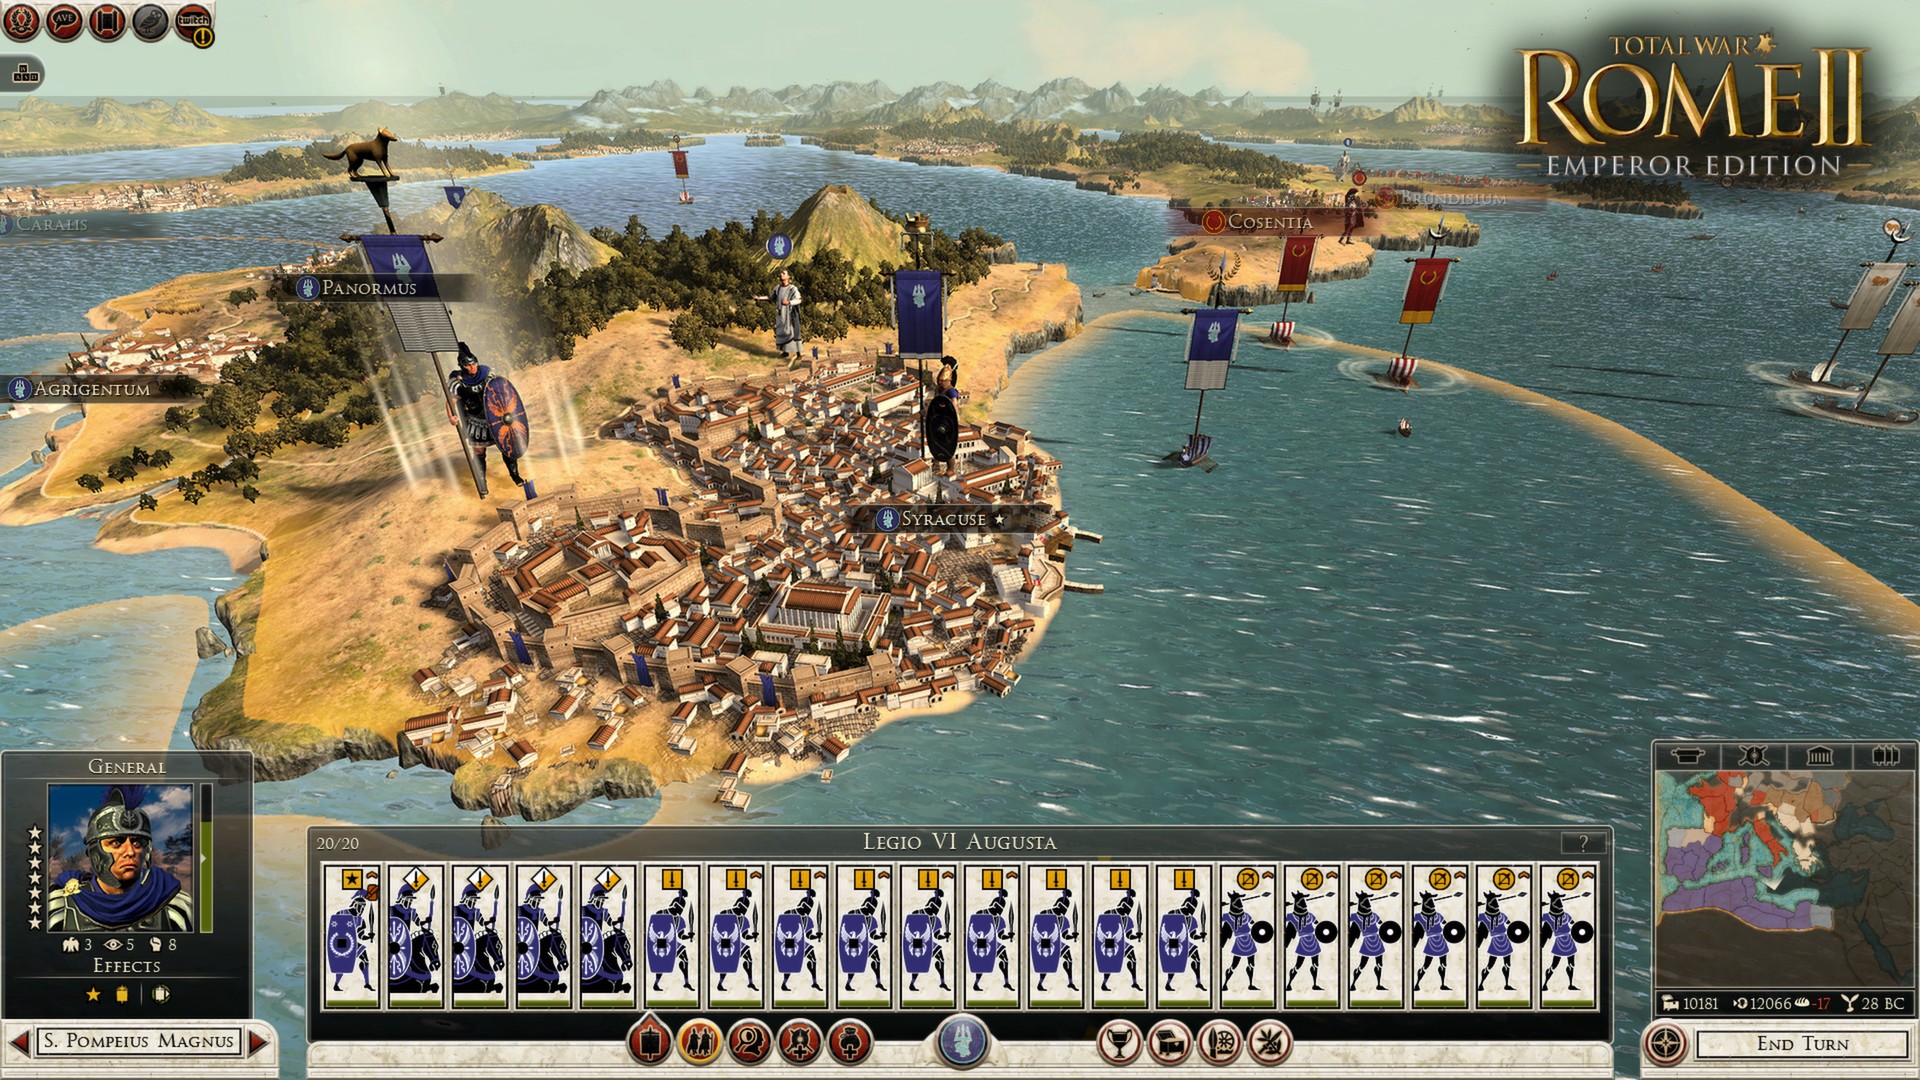 Total war: rome ii - greek states culture pack download 1.14